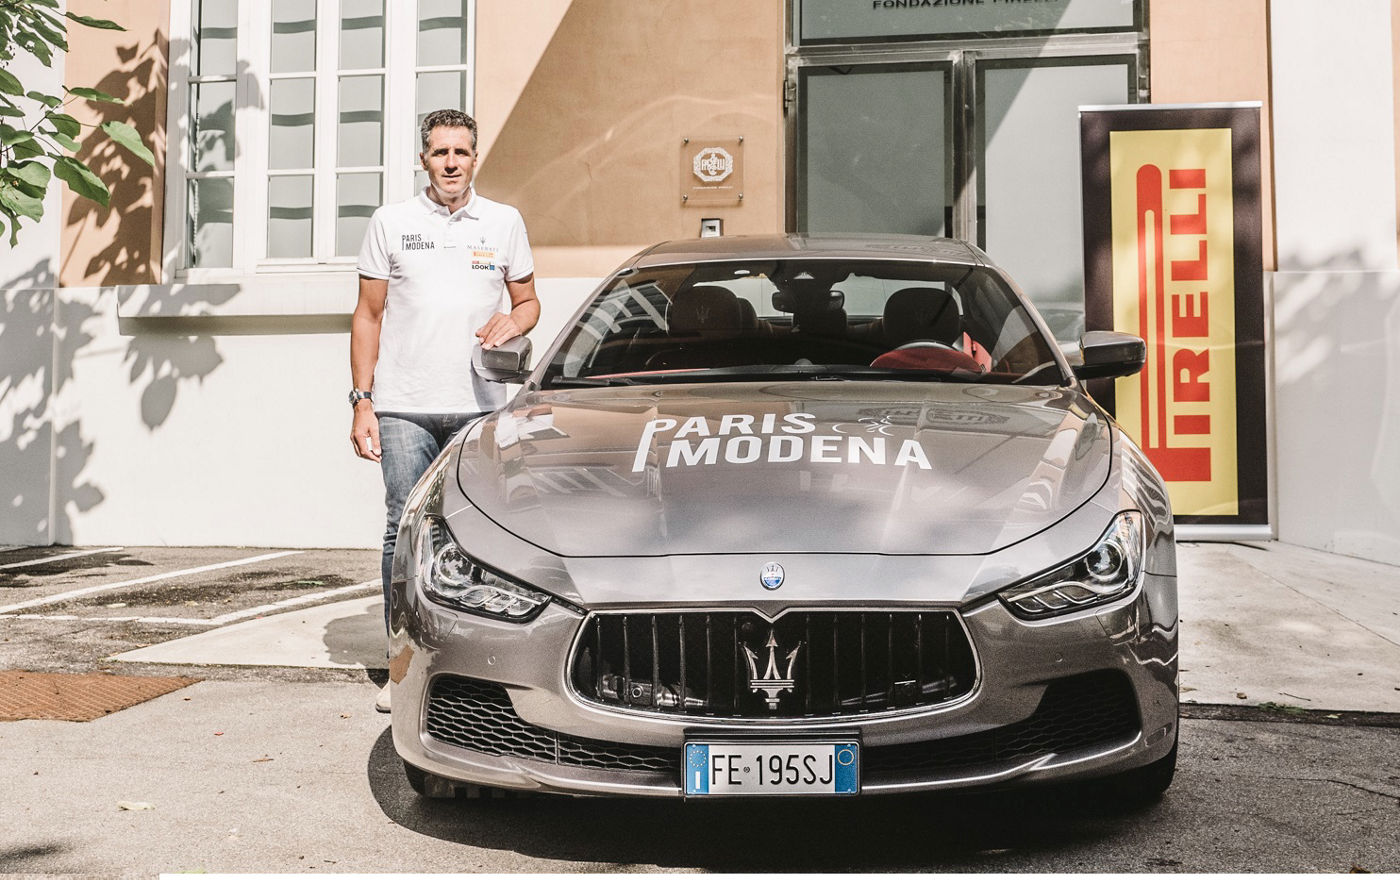 Miguel Indurain with a Maserati Ghibli at Fondazione Pirelli